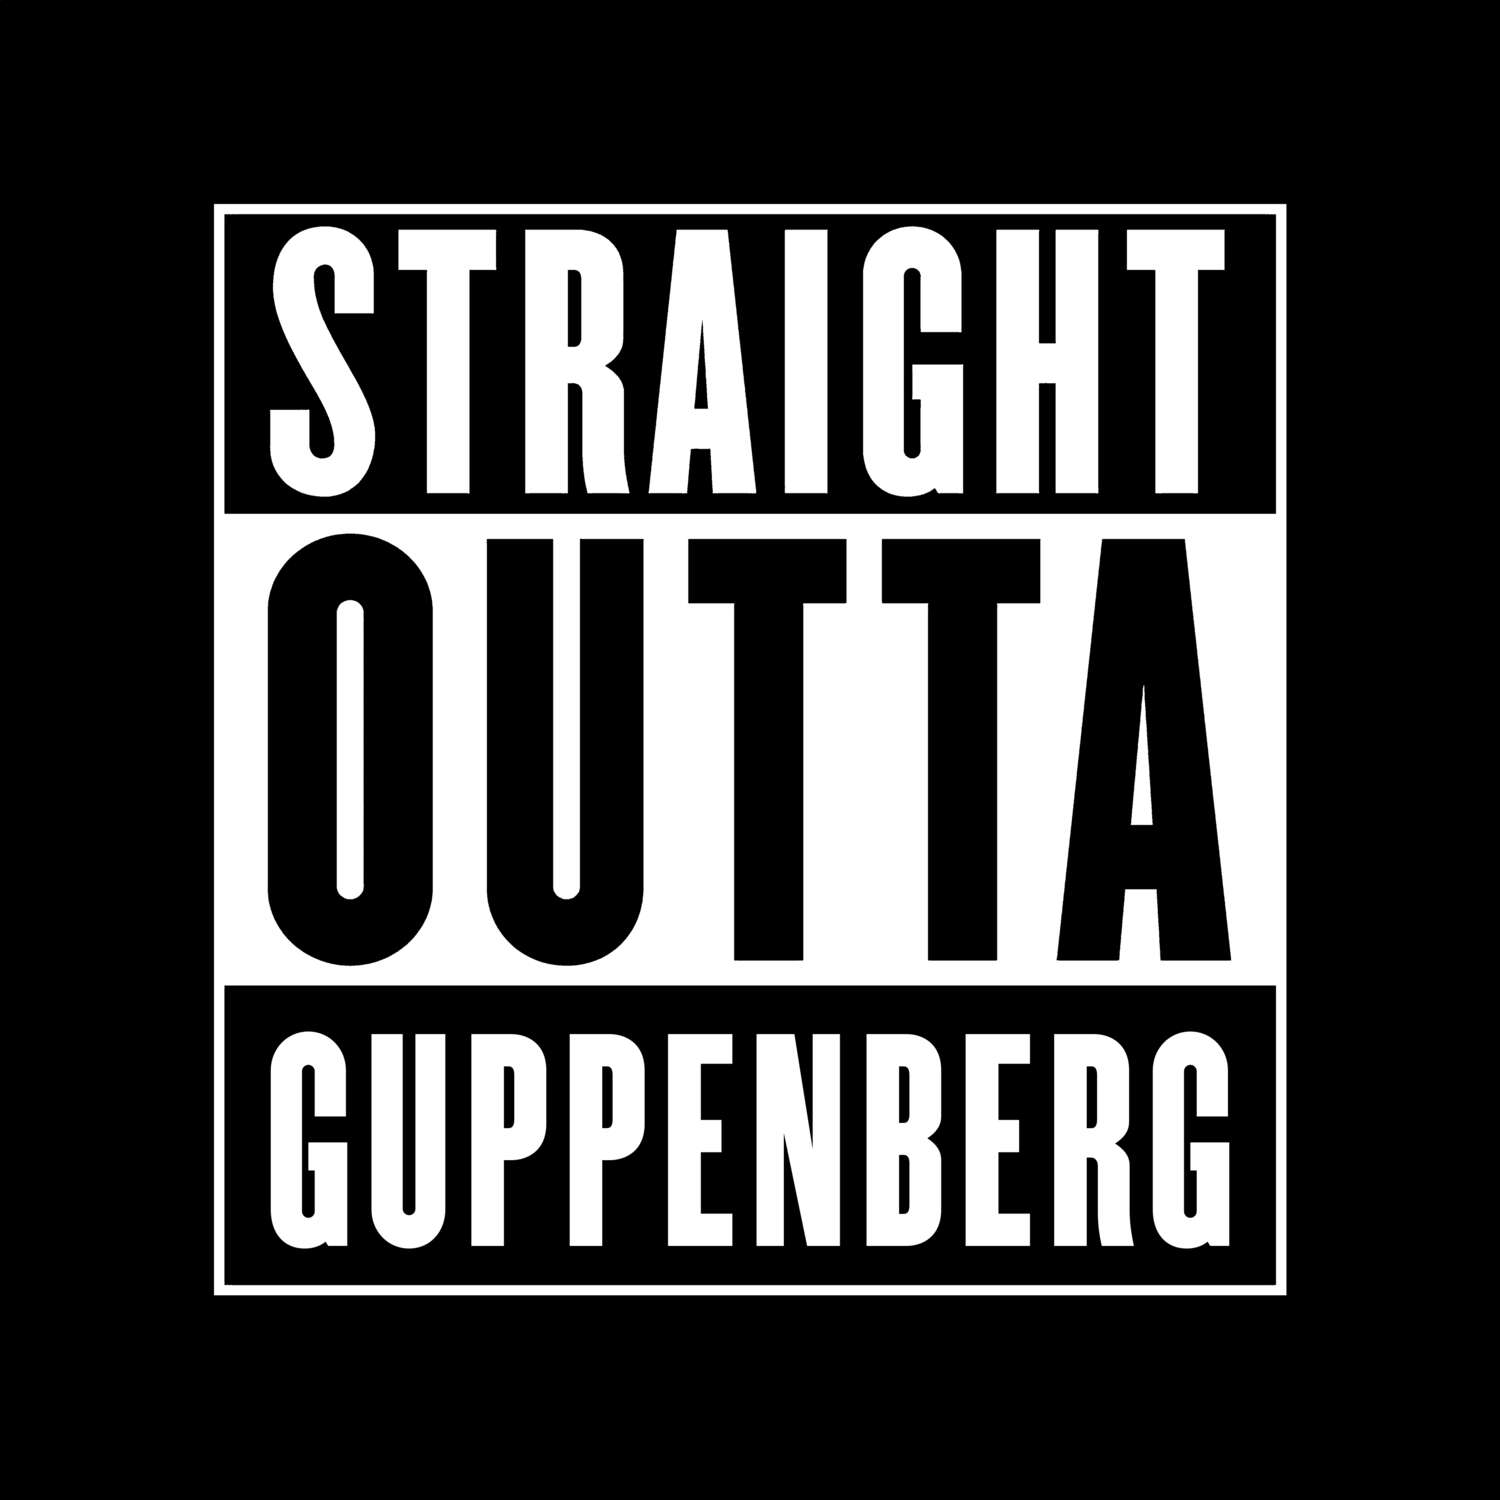 Guppenberg T-Shirt »Straight Outta«